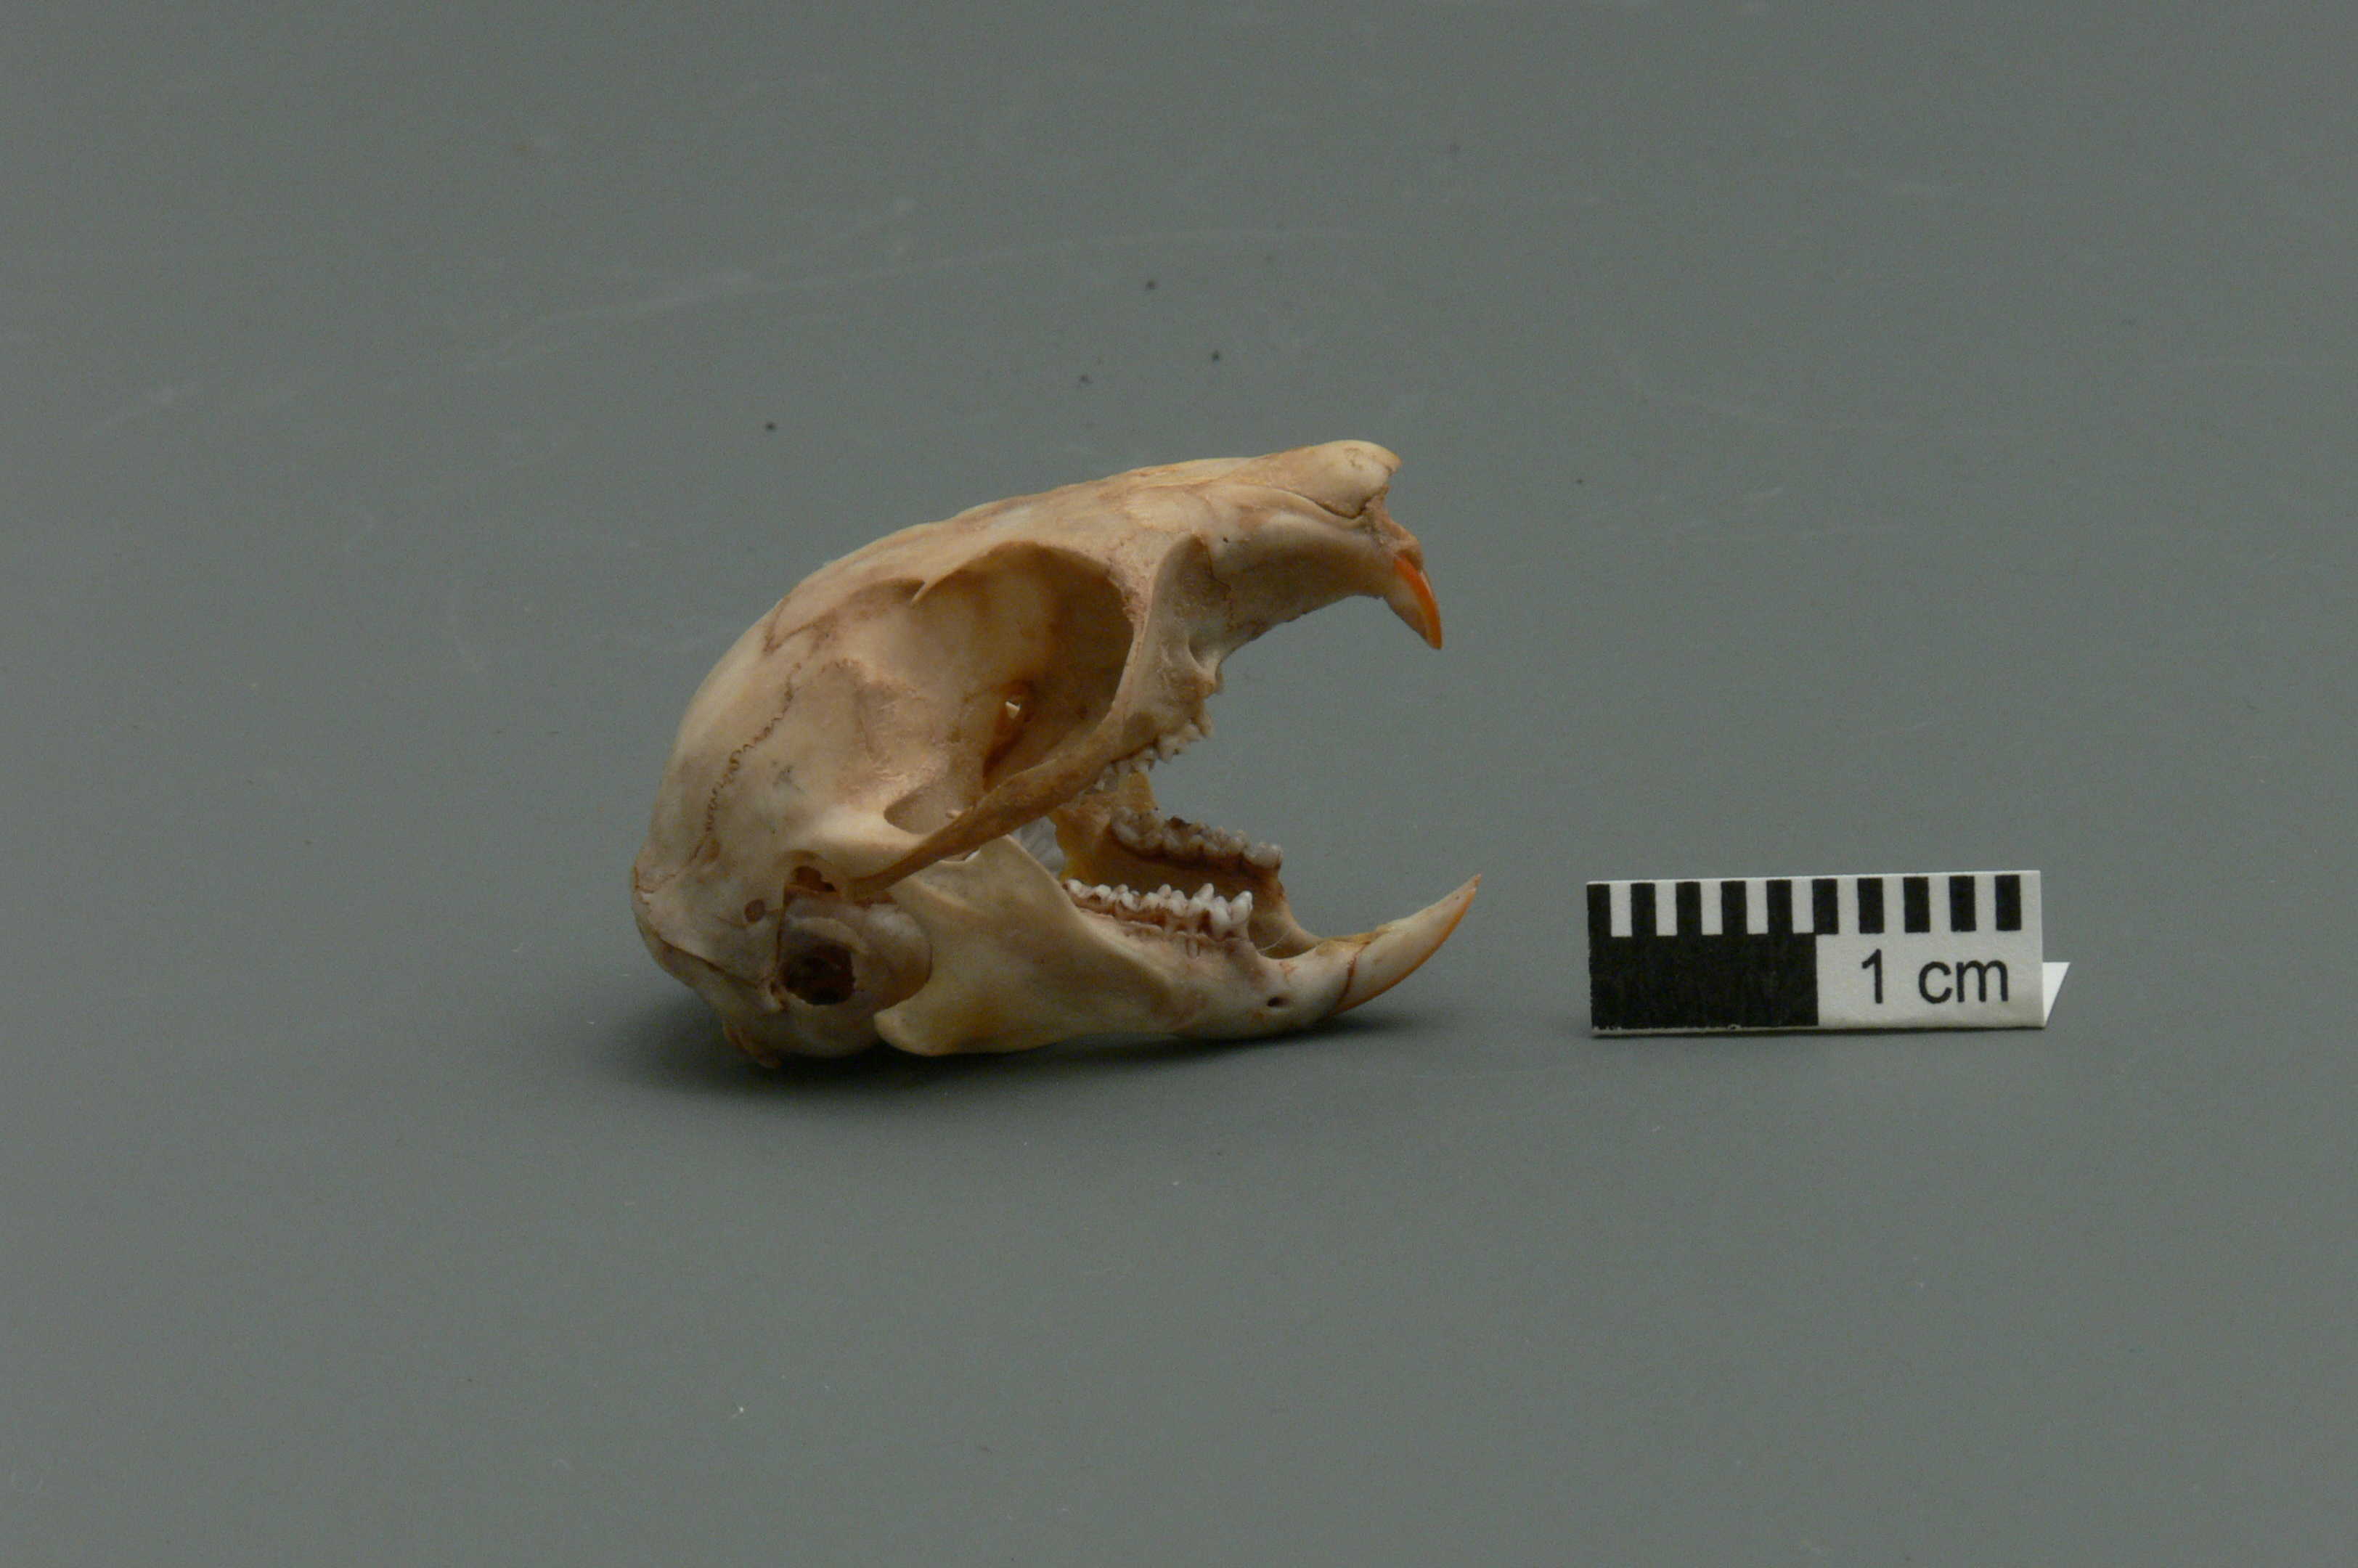 Skulls and Teeth · University of Puget Sound